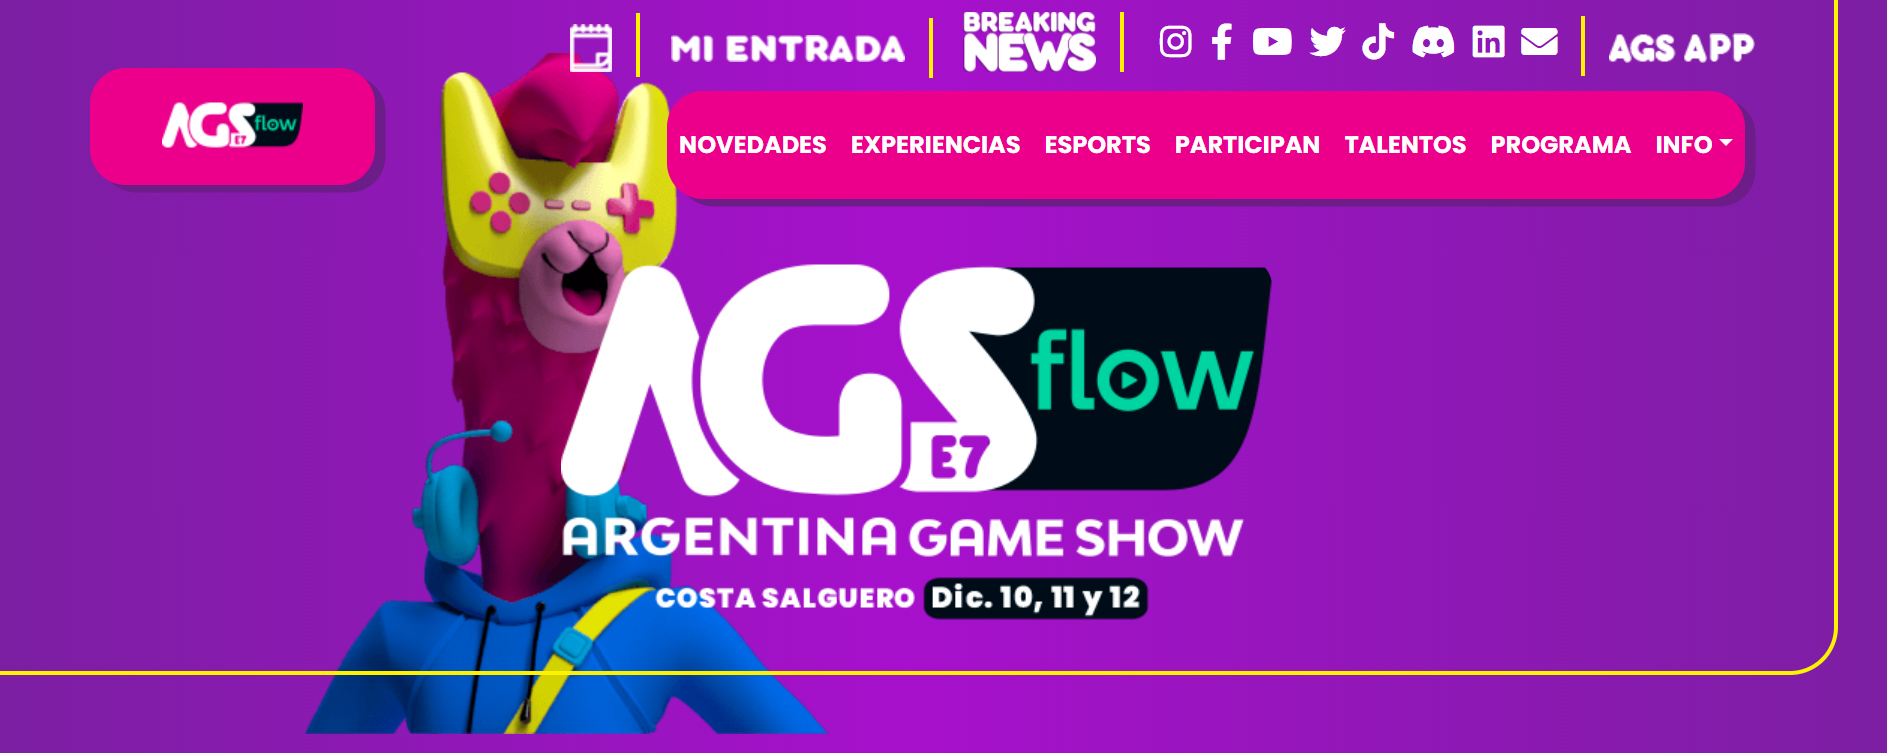 Argentina Game Show 2021 03